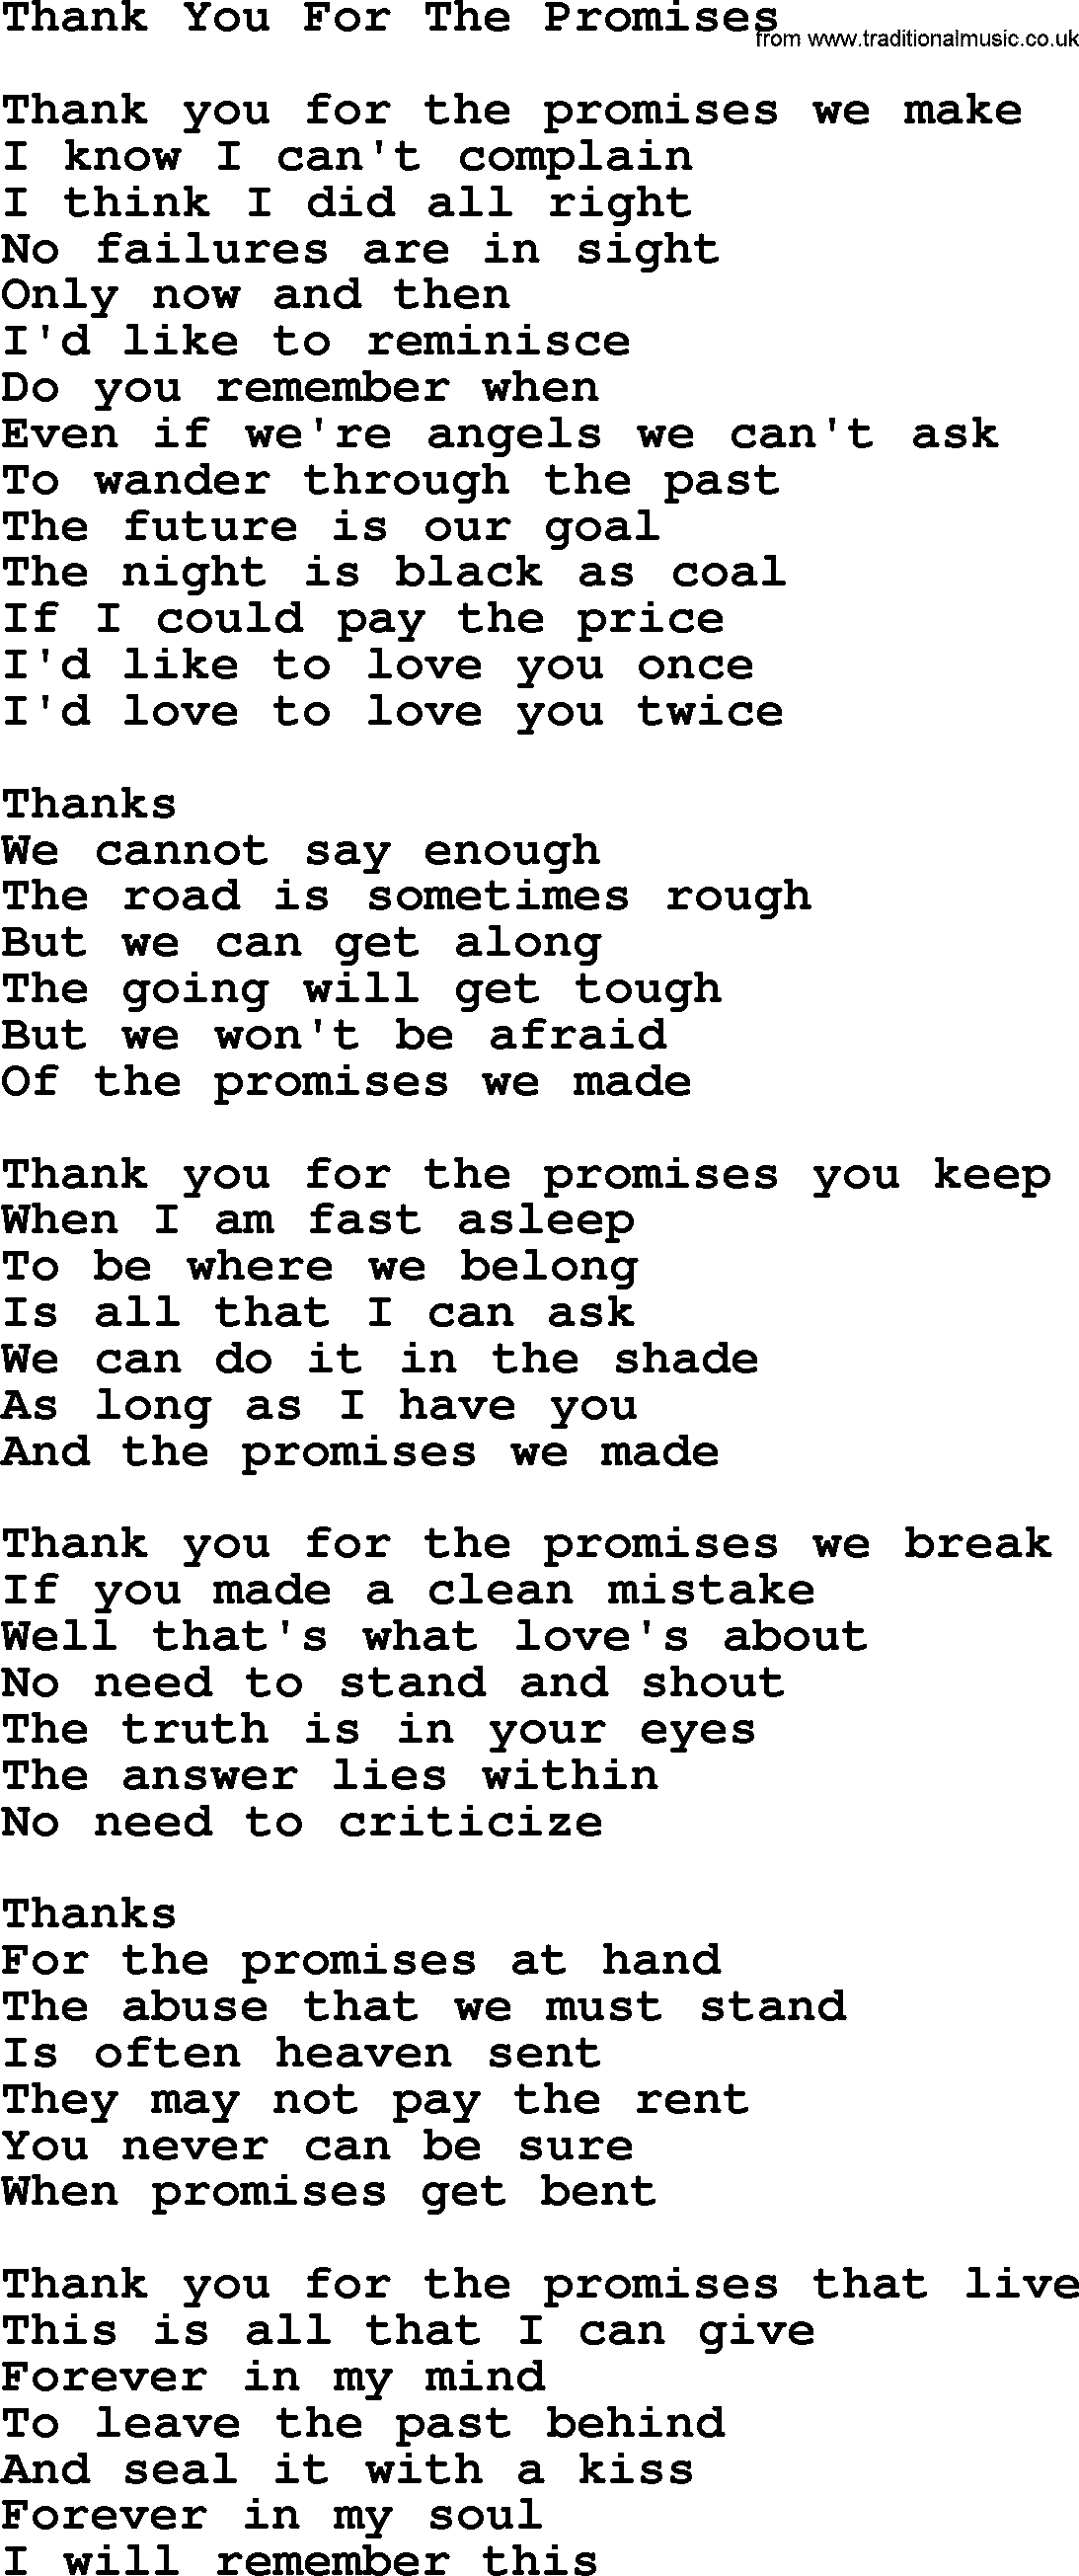 Gordon Lightfoot song Thank You For The Promises, lyrics